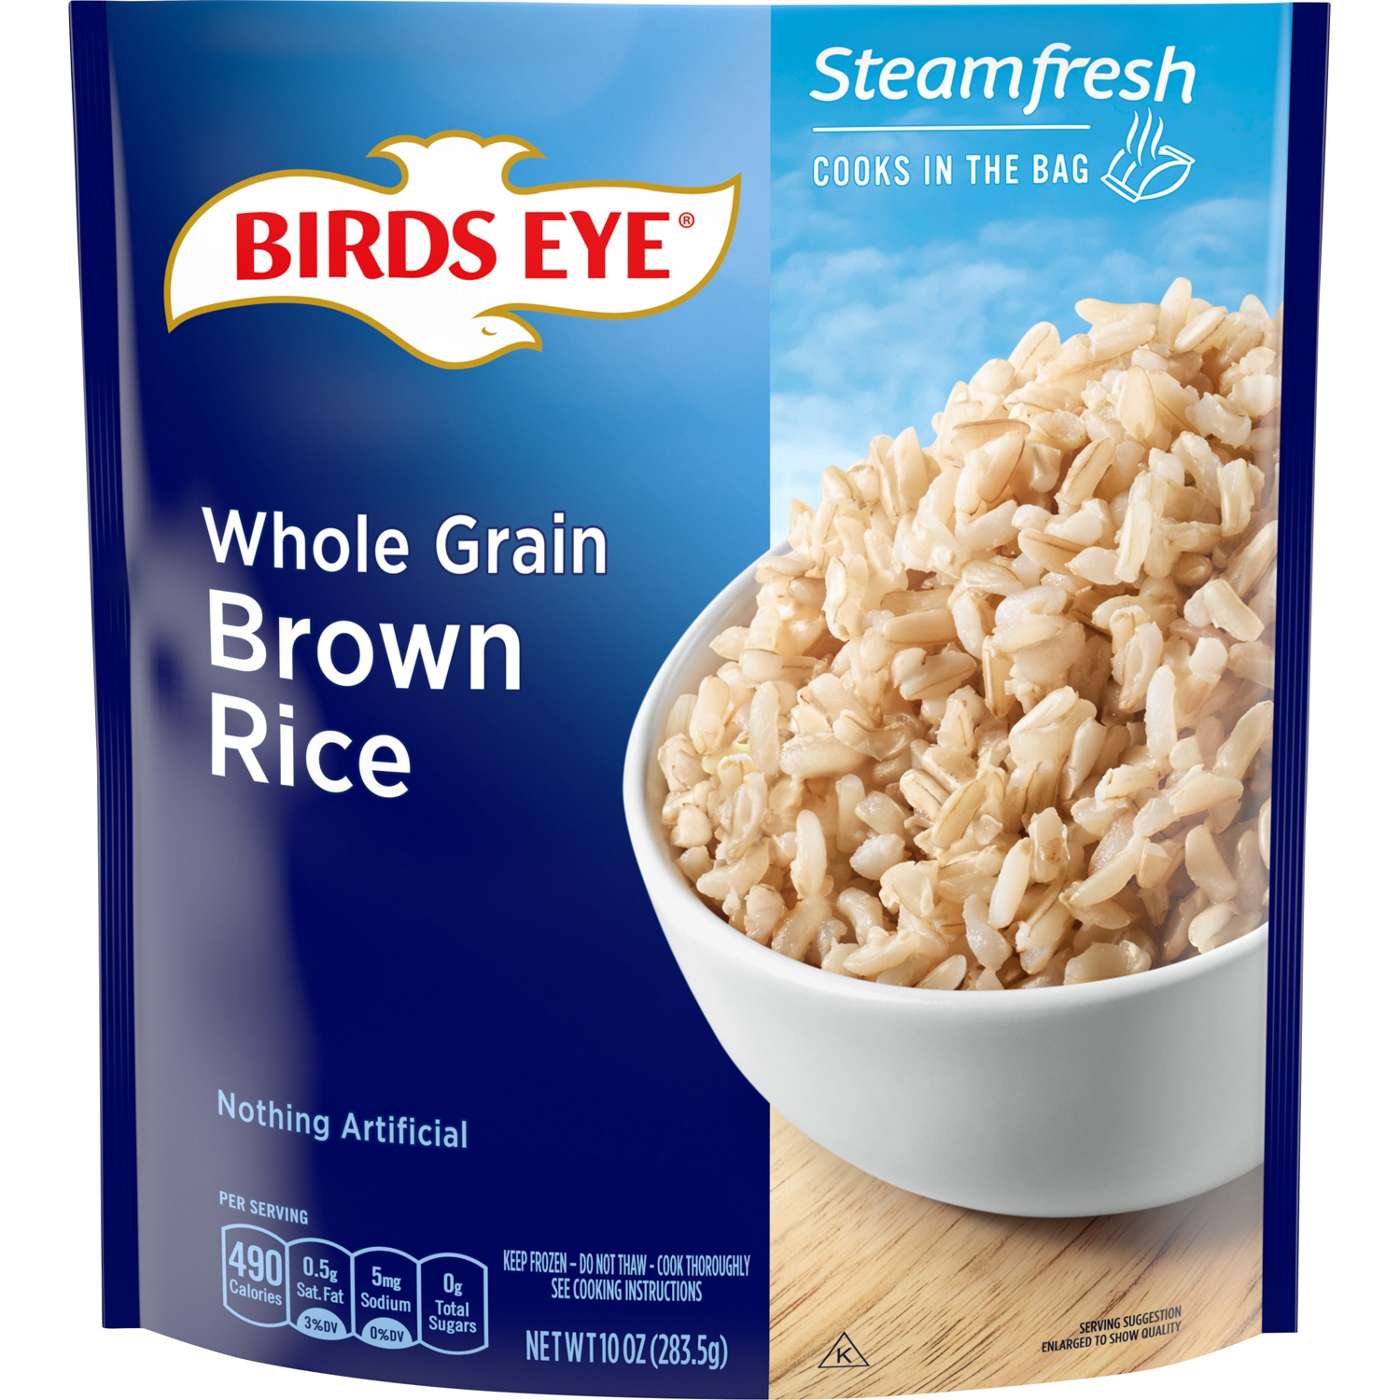 Birds Eye Frozen Steamfresh Whole Grain Brown Rice; image 1 of 6